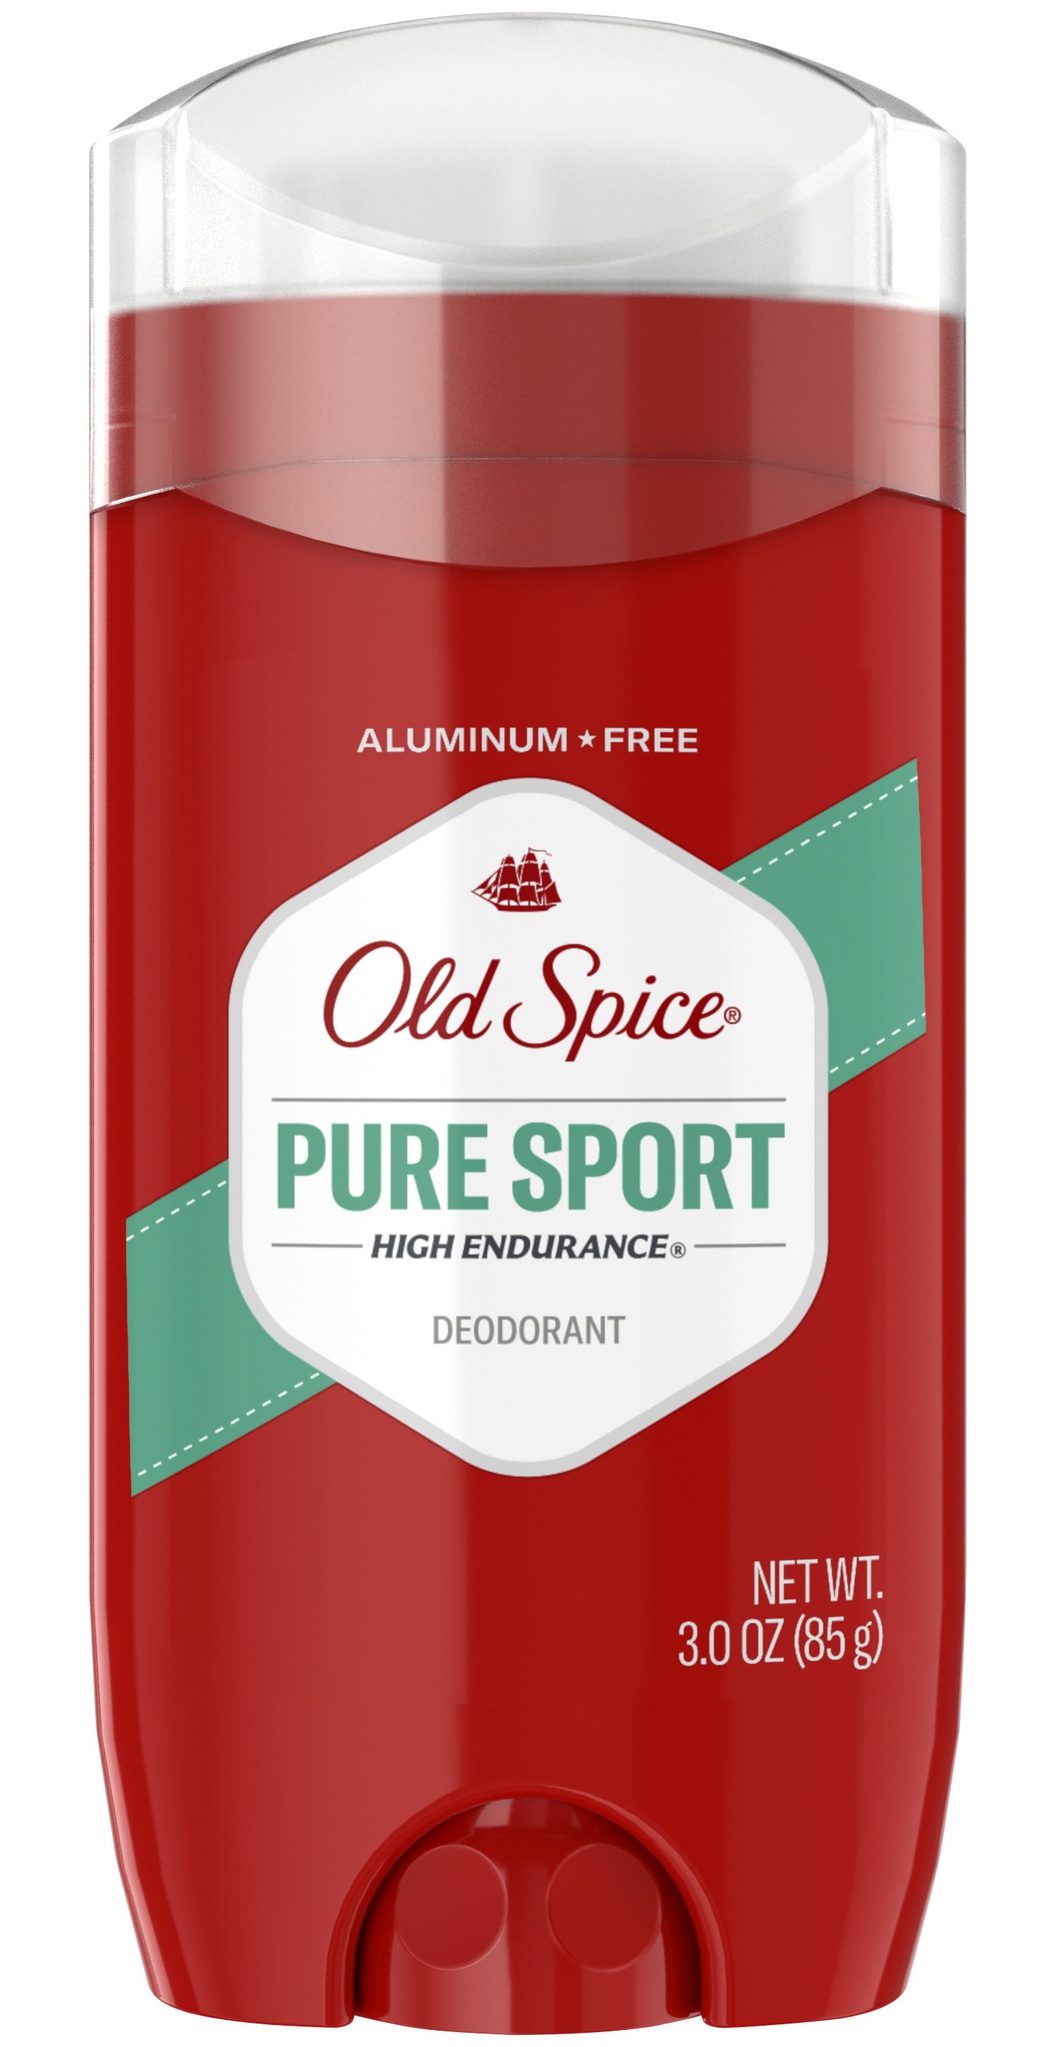 Old Spice Pure Sport High Endurance Aluminum Free Deodorant